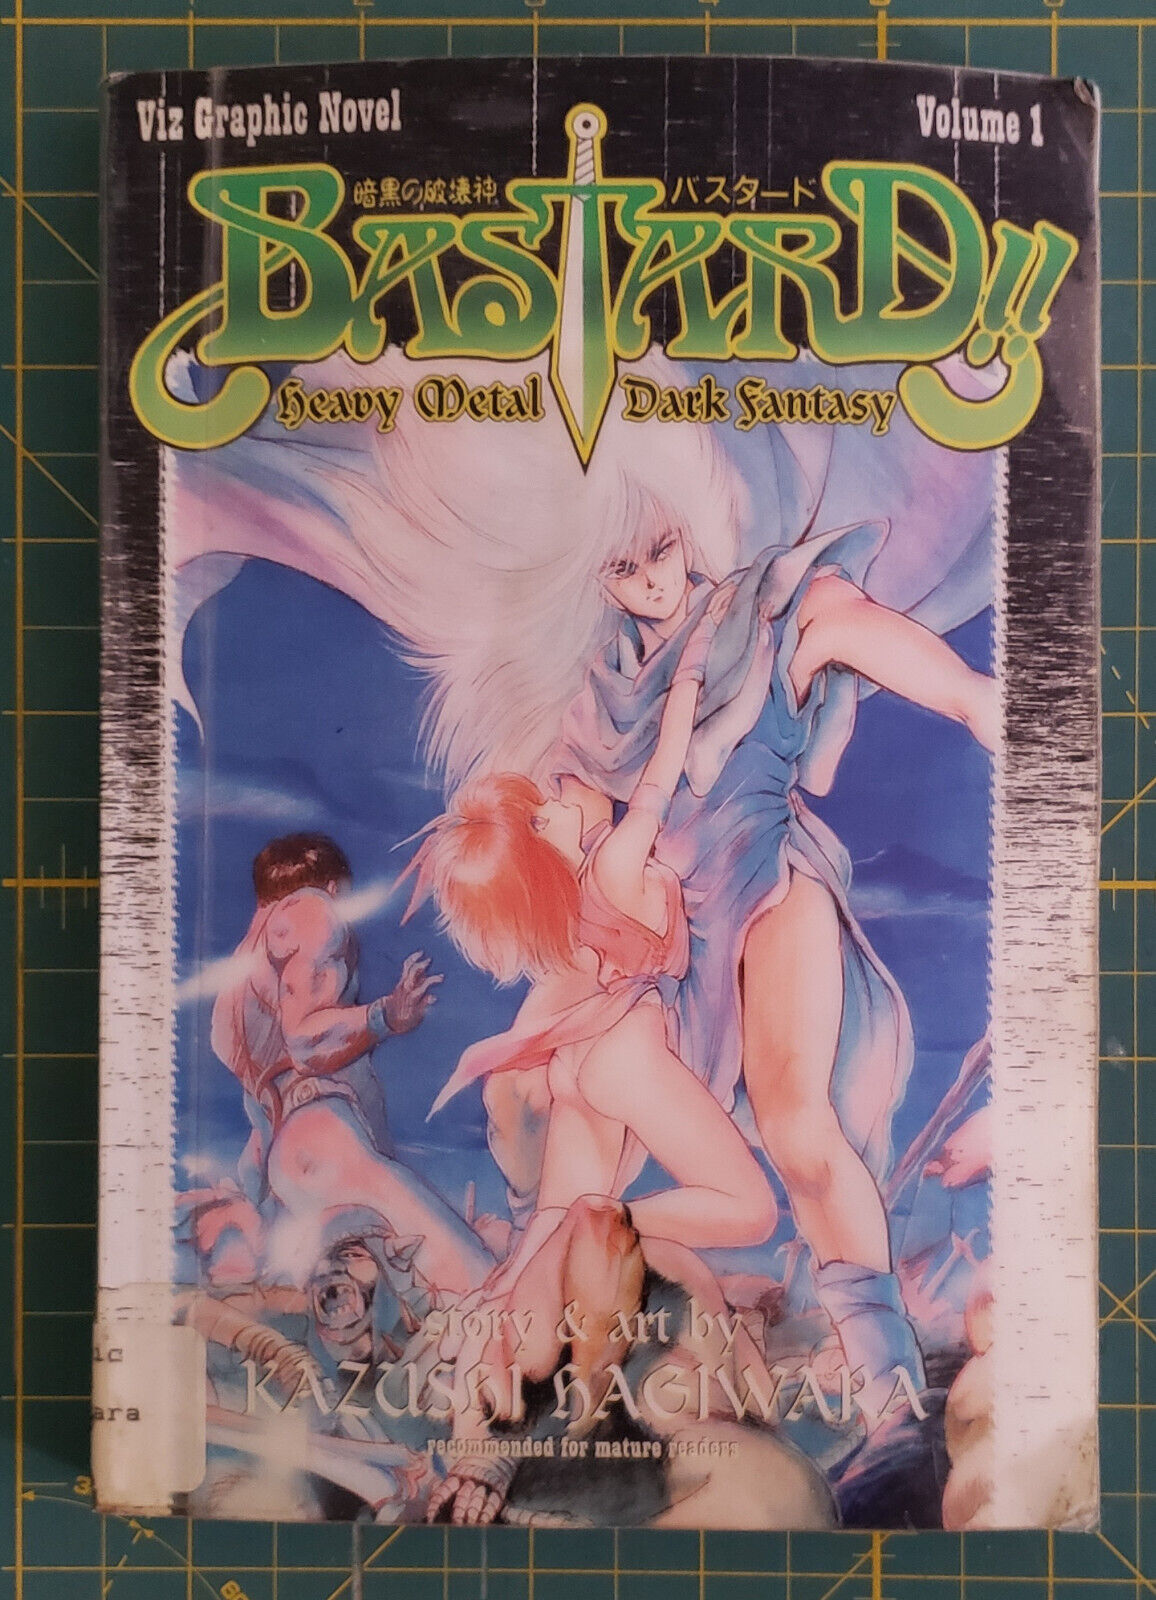 BASTARD Vol. 1 by Kazushi Hagiwara 2002 Viz graphic novel SC book ex-lib copy